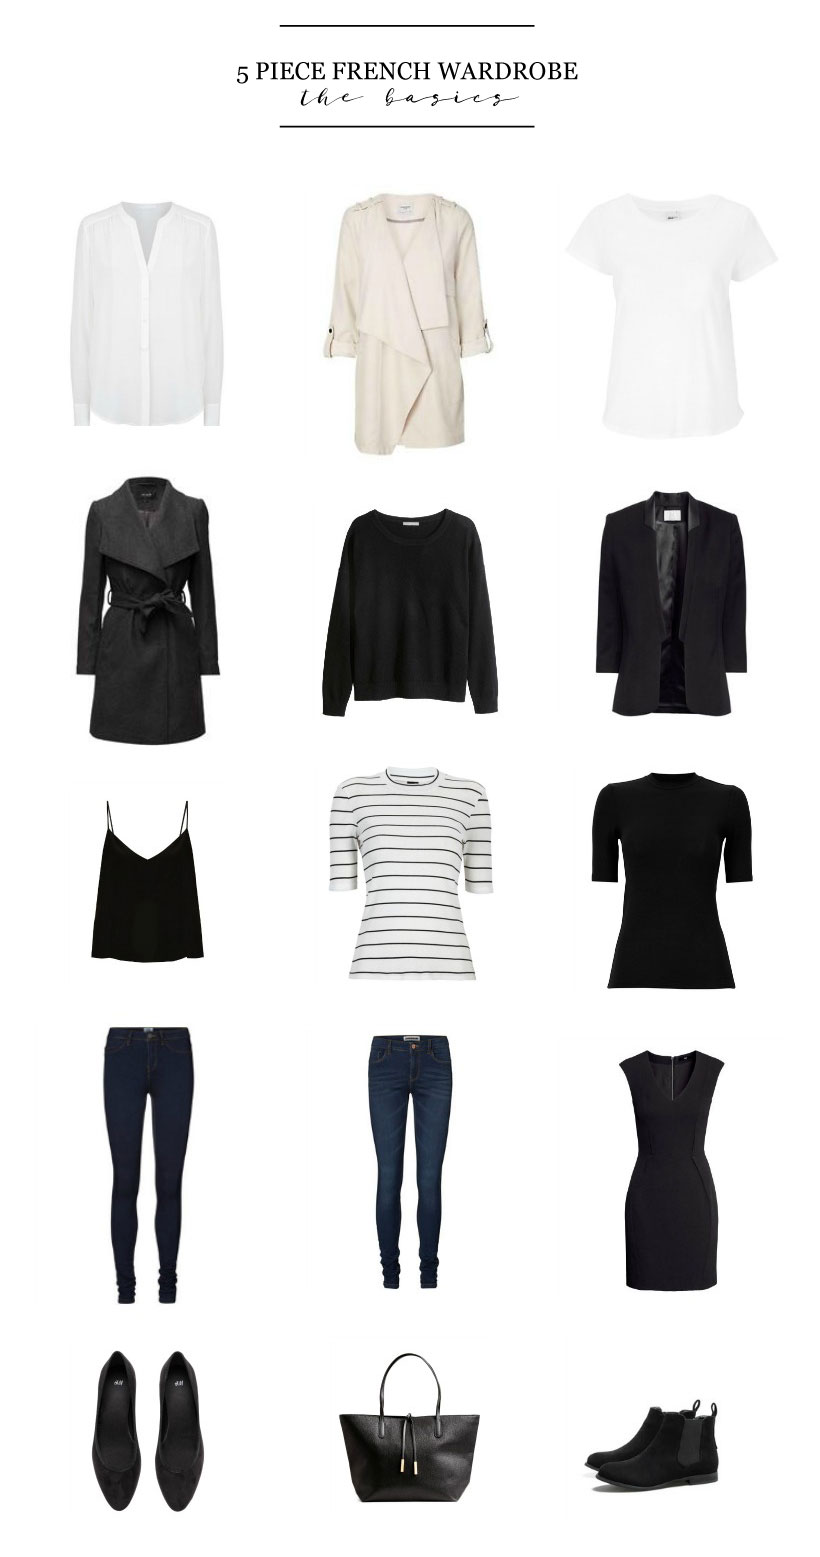 5 Piece French Wardrobe | The Basics